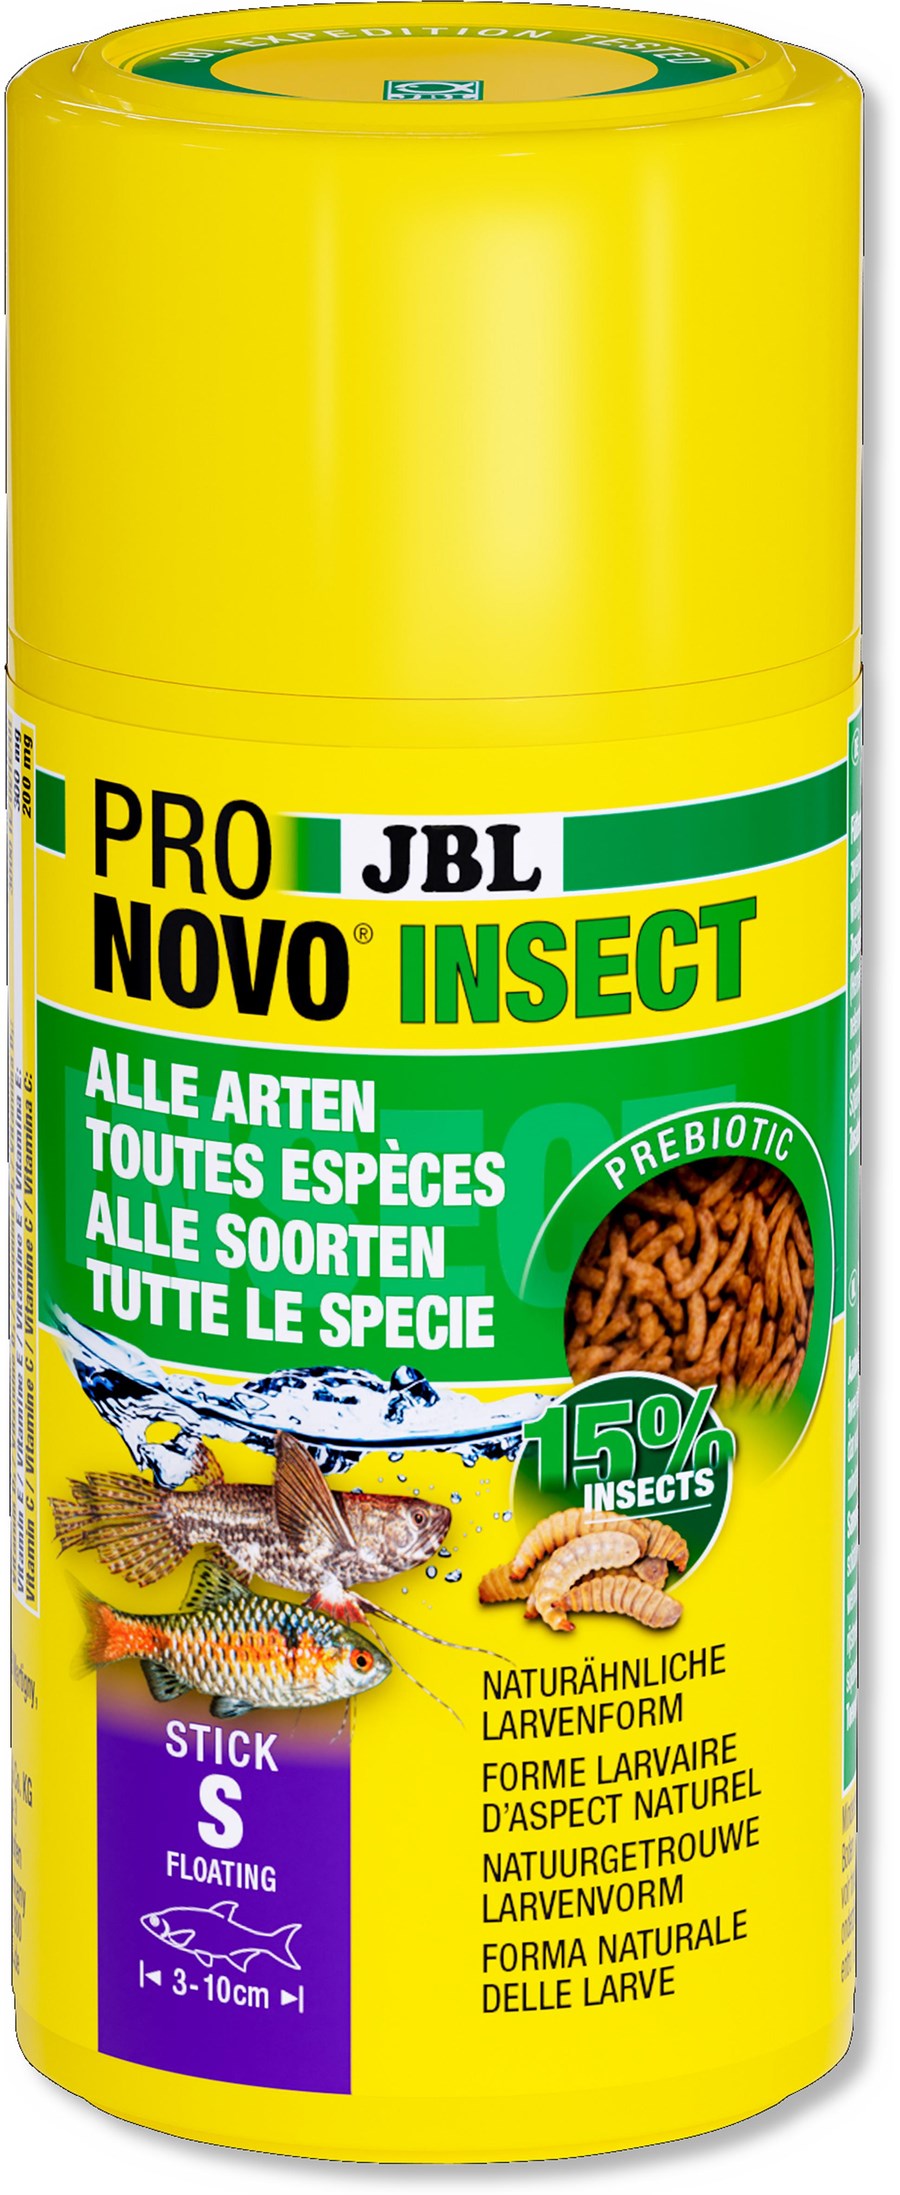 JBL PRONOVO INSECT STICK S 100ml +